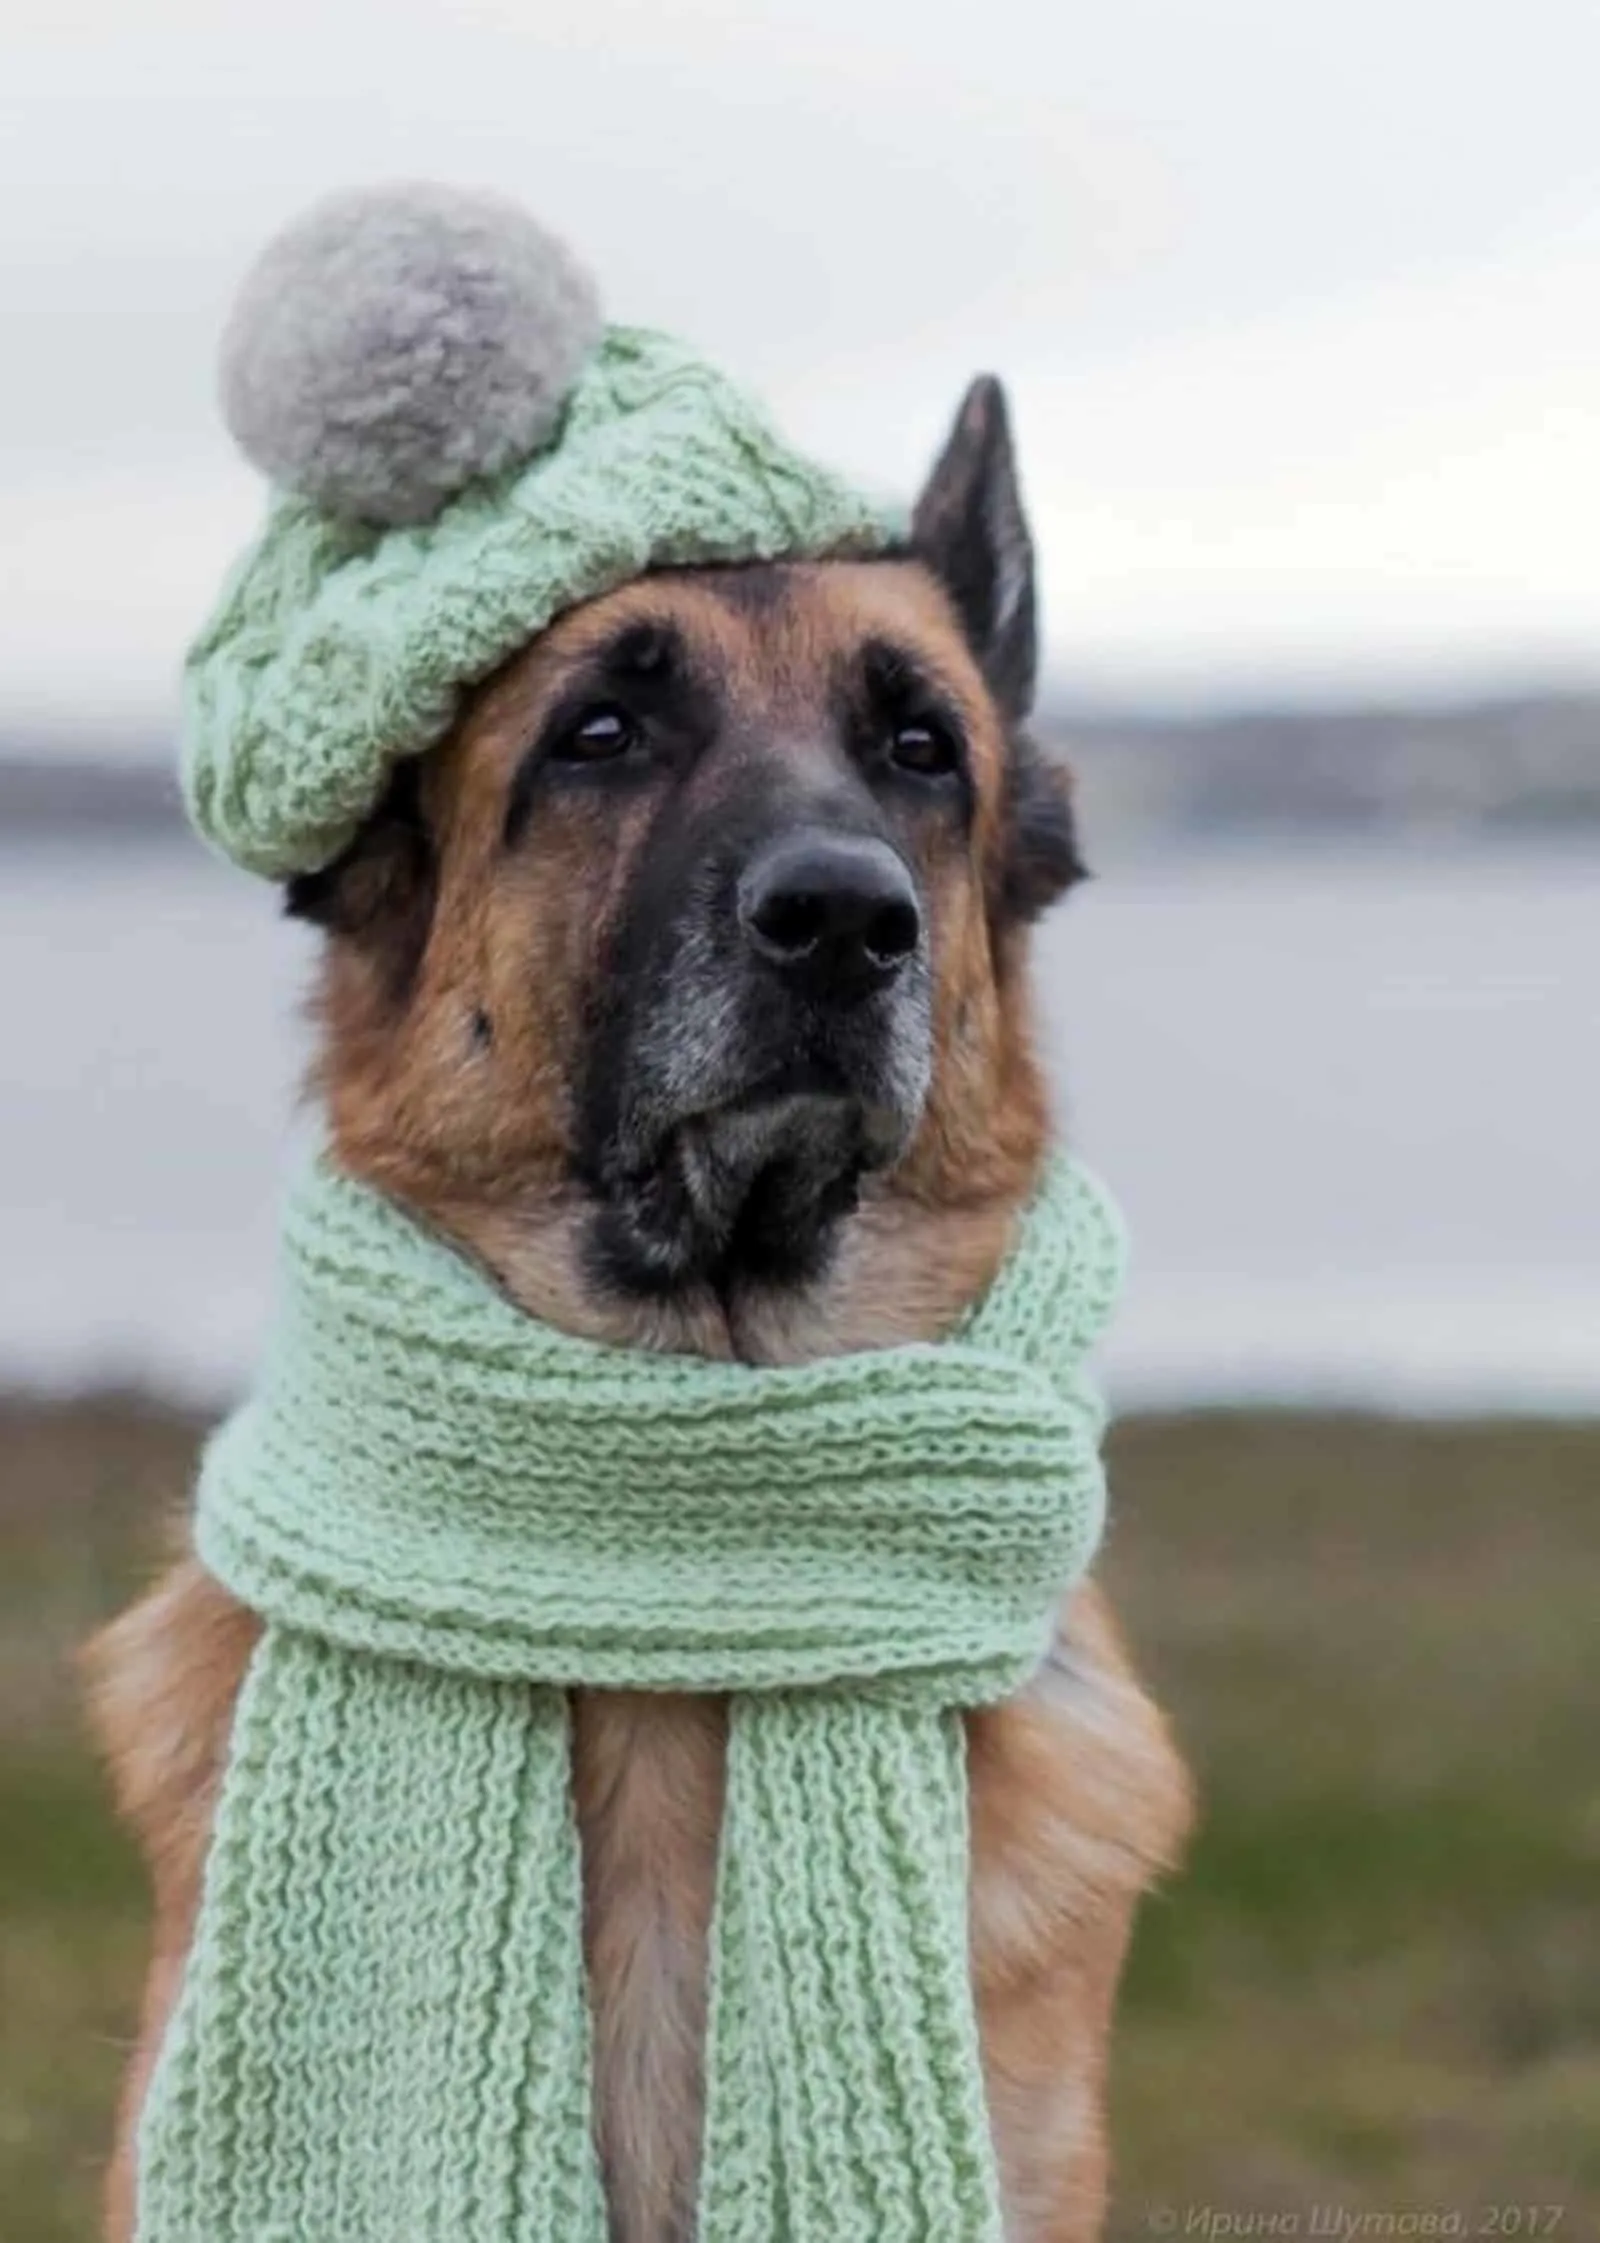 german shepherd dog wearing wool cap and scarf